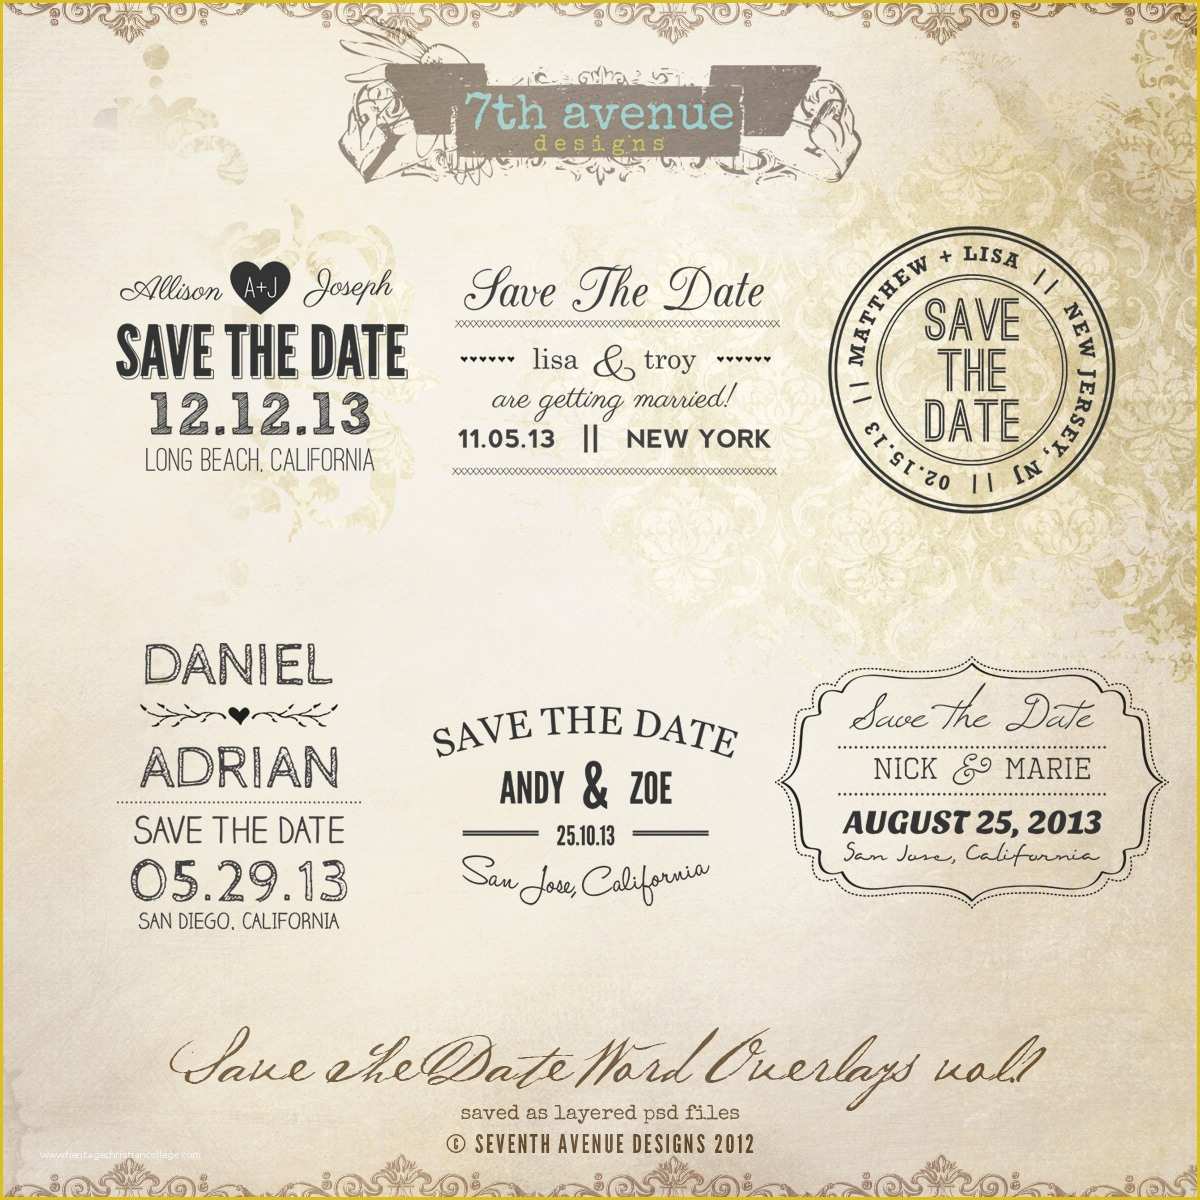 Free Save the Date Wedding Invitation Templates Of Senior Card Templates No 2 [senior2] $4 00 7thavenue